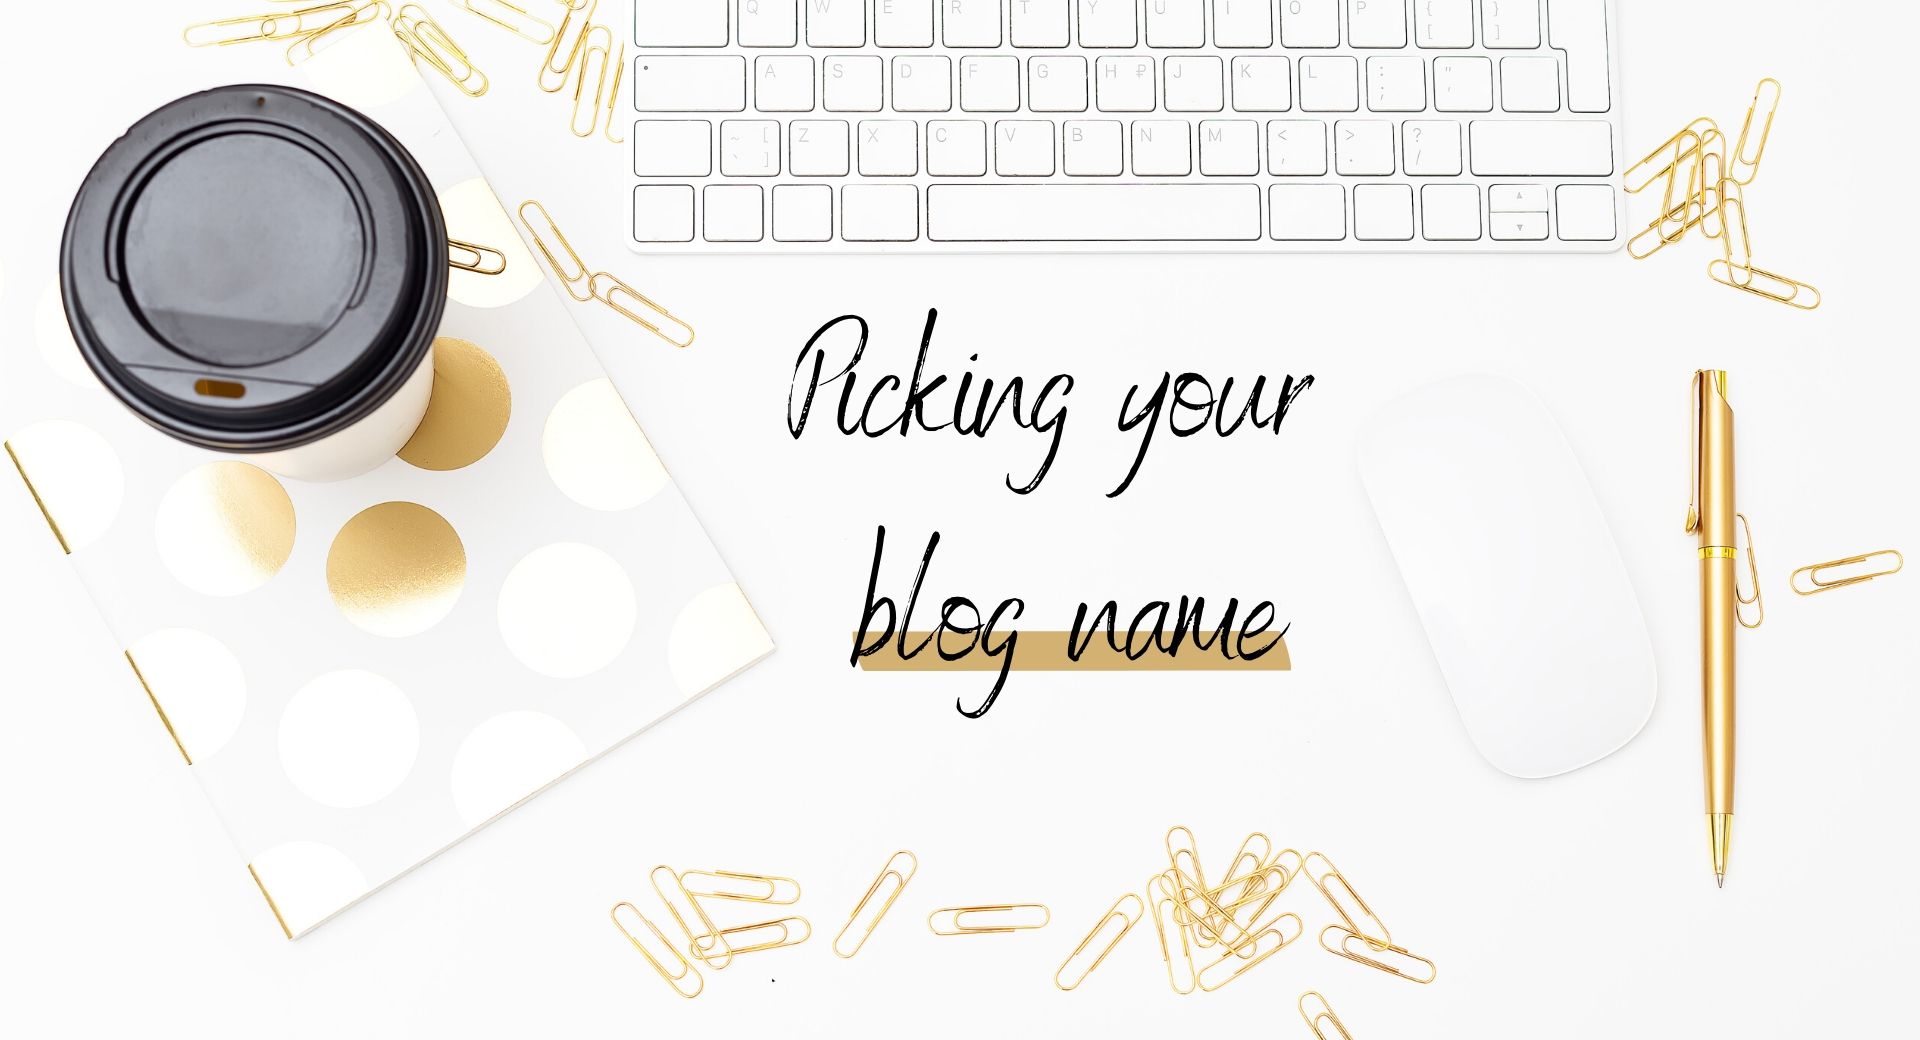 blog name